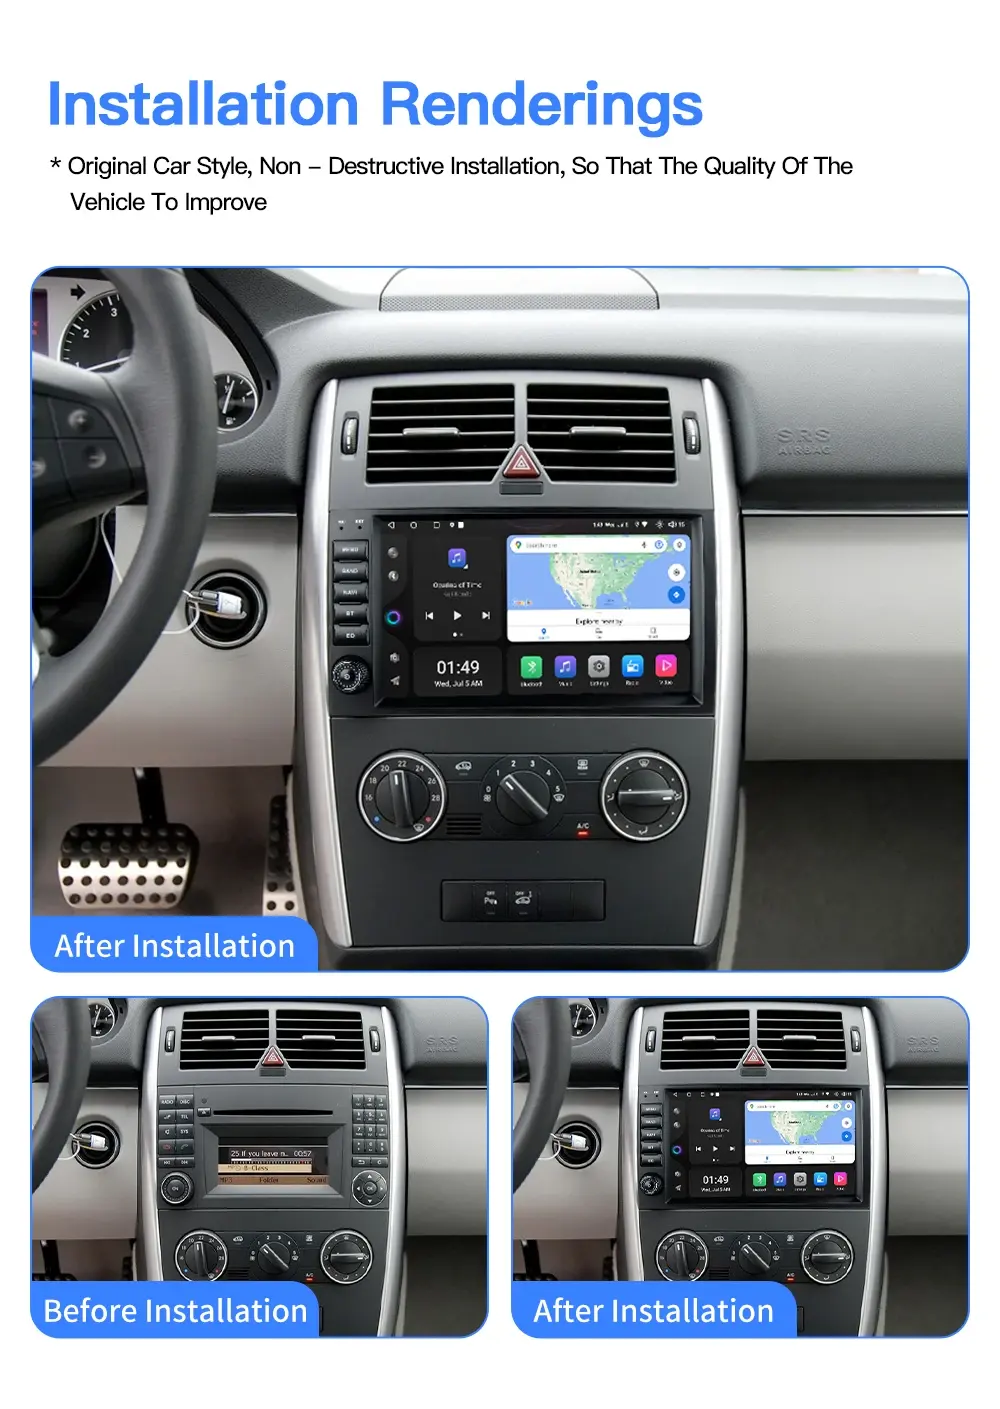 BQCC DAB CarPlay 라디오 스테레오 미러링크 7 인치 자동 라디오 1 + 32GB/2 + 32GB/2 + 64GB GPS 와이파이 RDS 메르세데스 벤스 B200 2008-2017